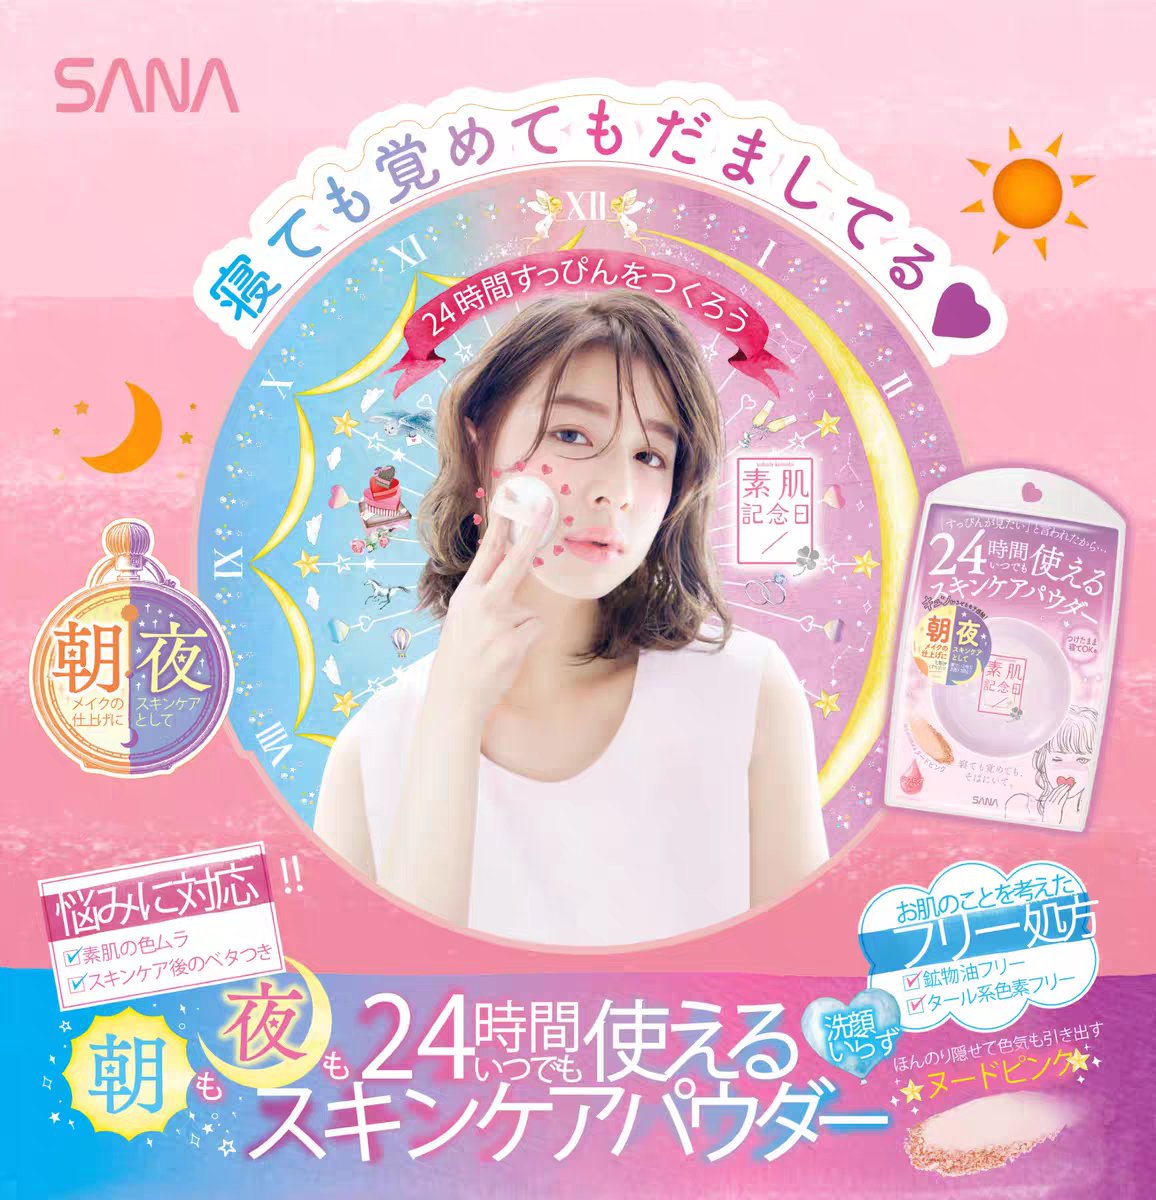 Sana Suhada Kinenbi Skin Care Powder - Sana | Kiokii and...